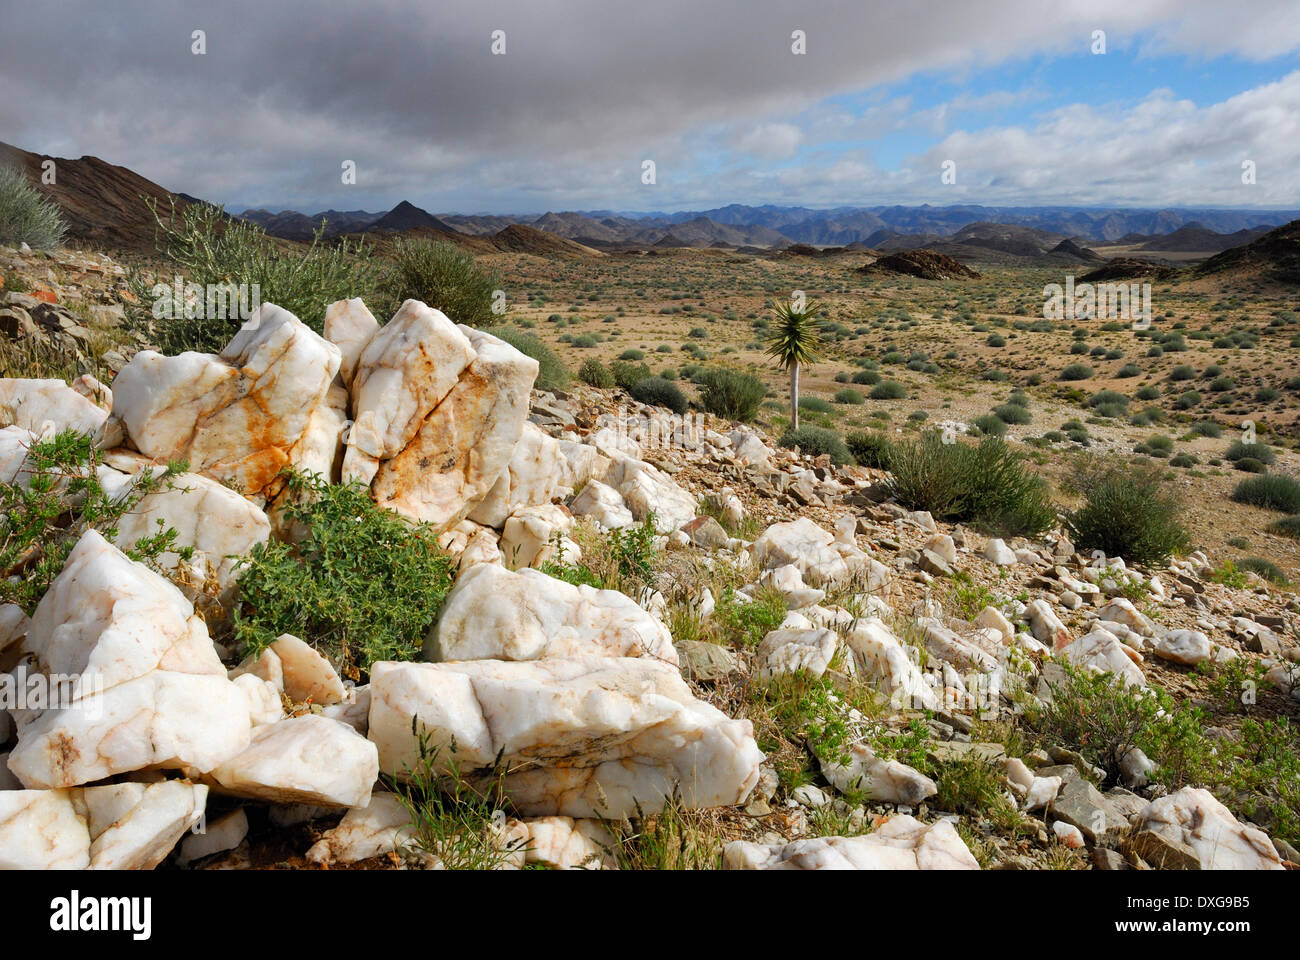 Young kokerboom among quartz rocks, Namaqualand 4x4 Trail Stock Photo